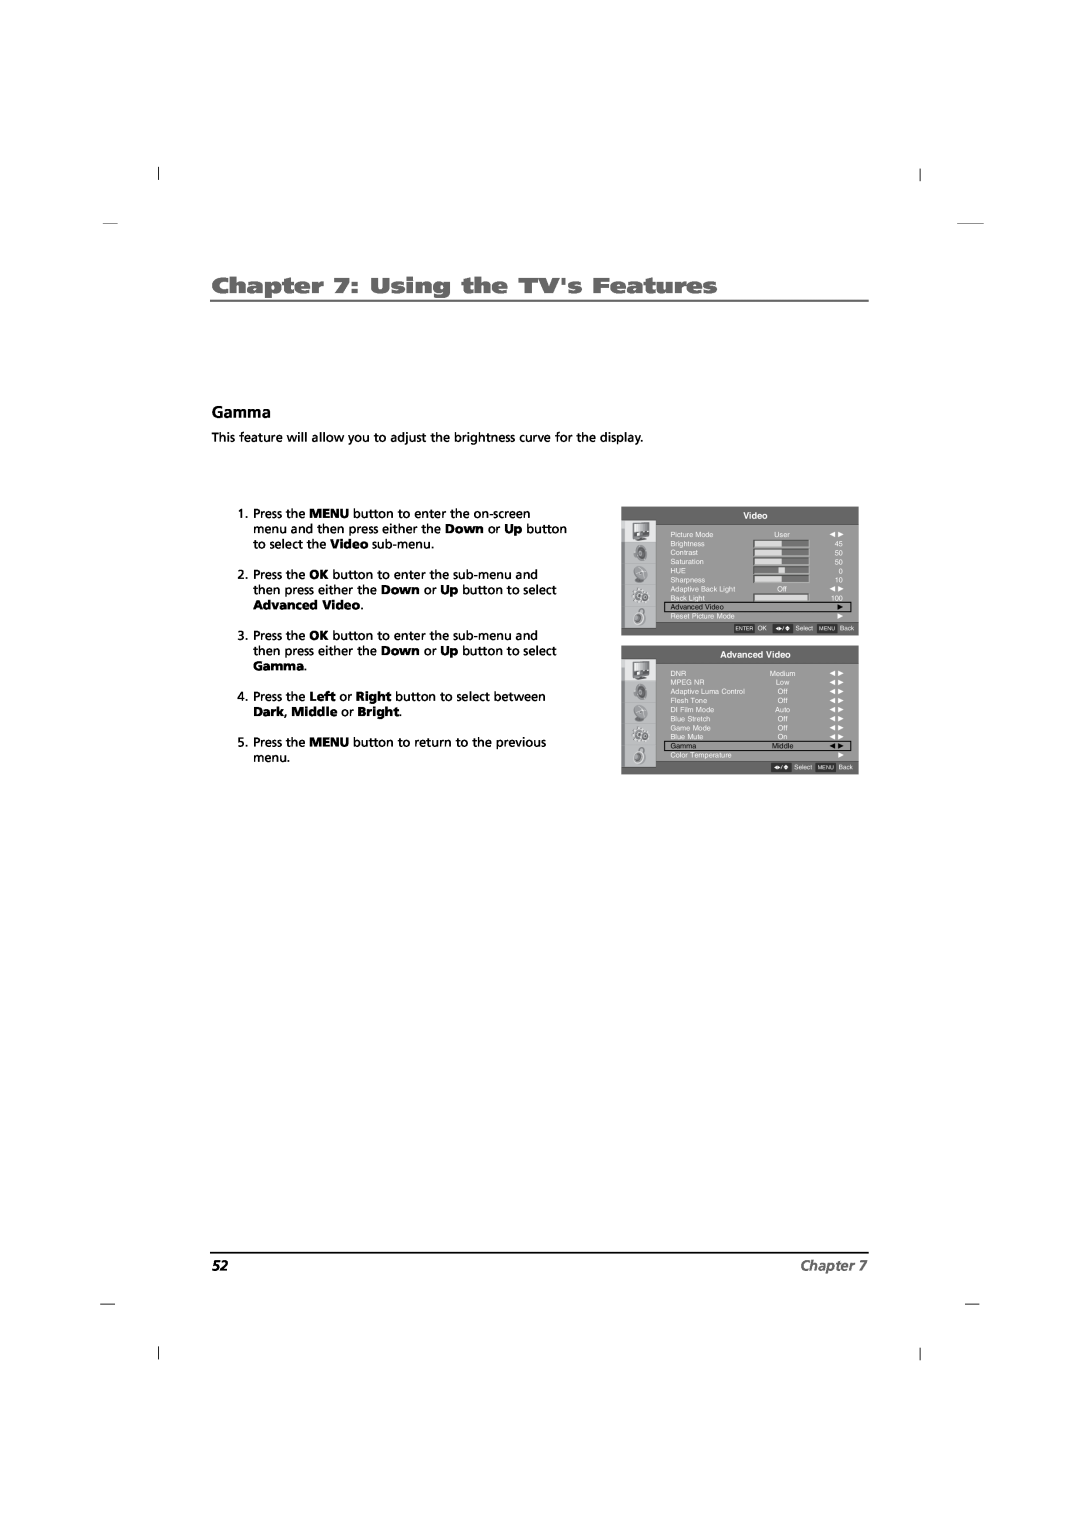 RCA J42HE820, J32HE720, J26HE820 manual Gamma, Using the TVs Features, Chapter 